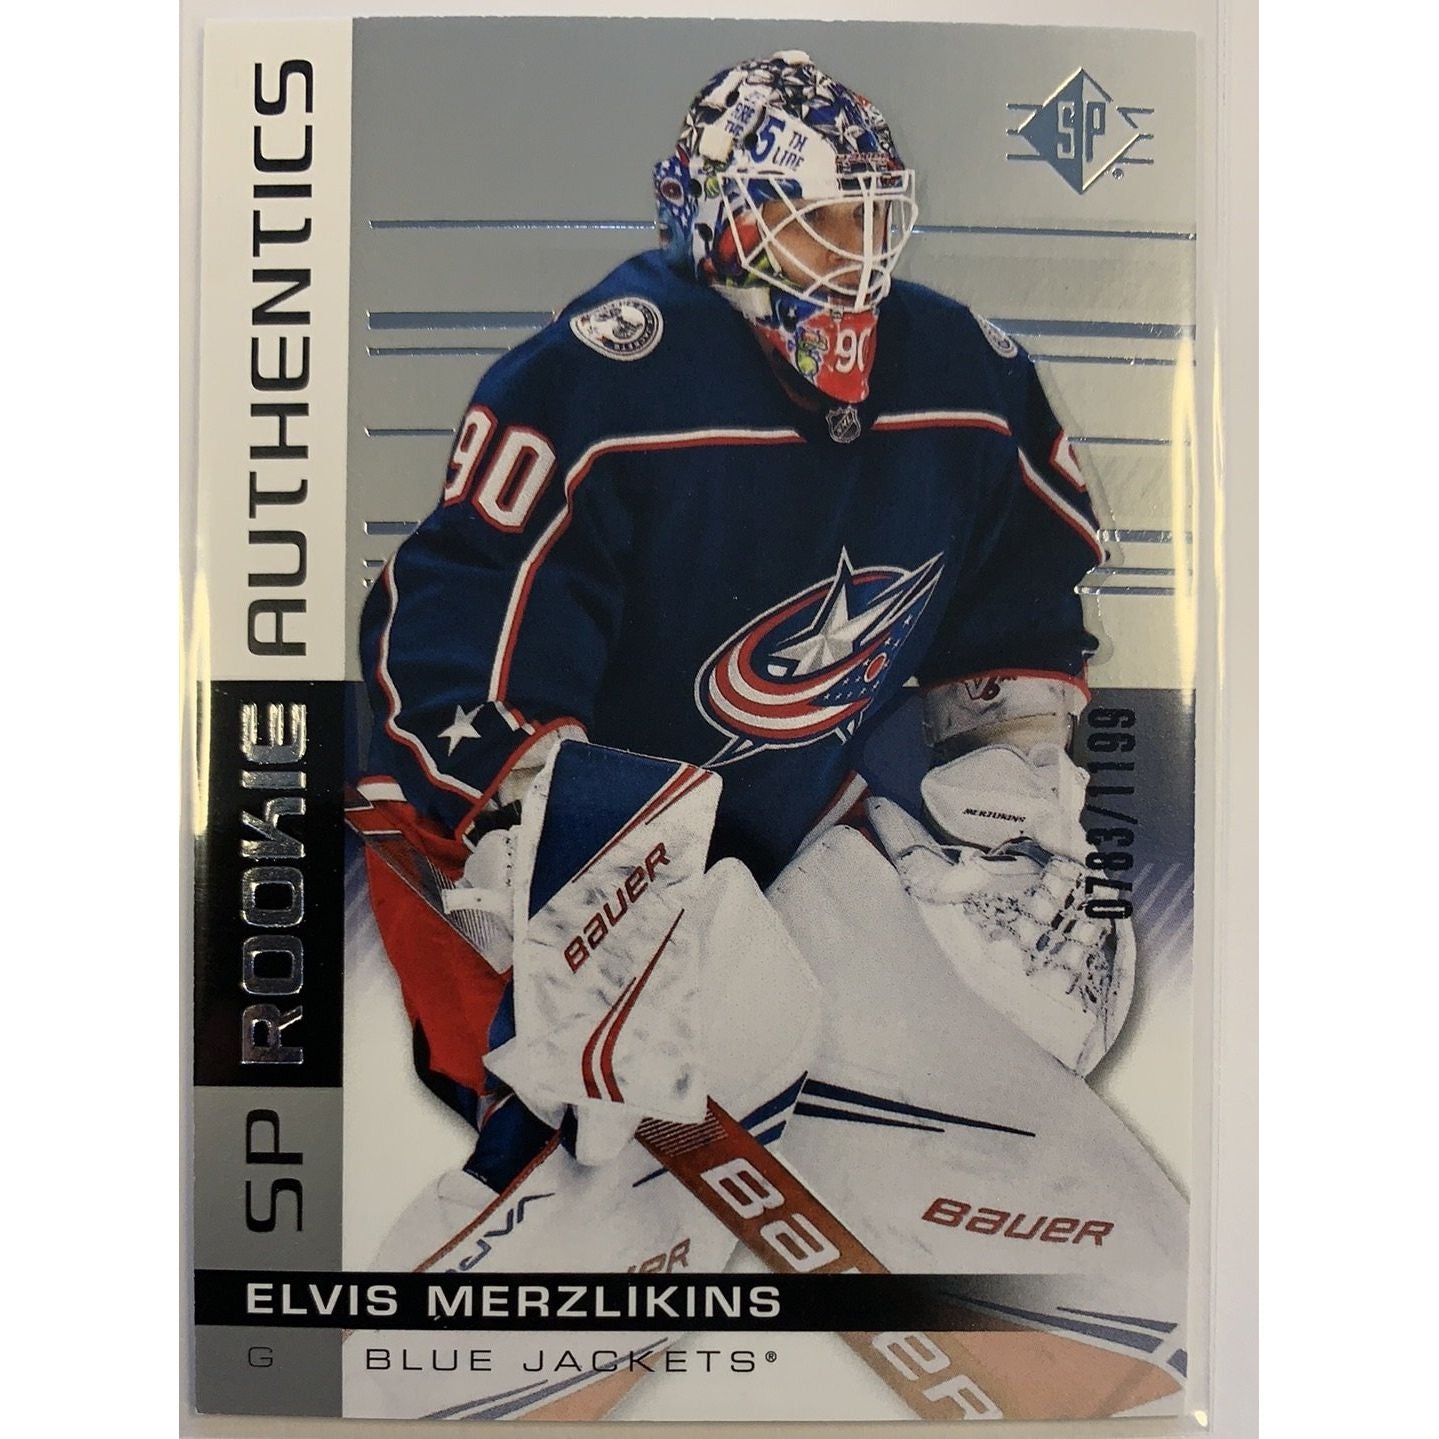  2019-20 SP Elvis Merzlikins Rookie Authentics /1199  Local Legends Cards & Collectibles